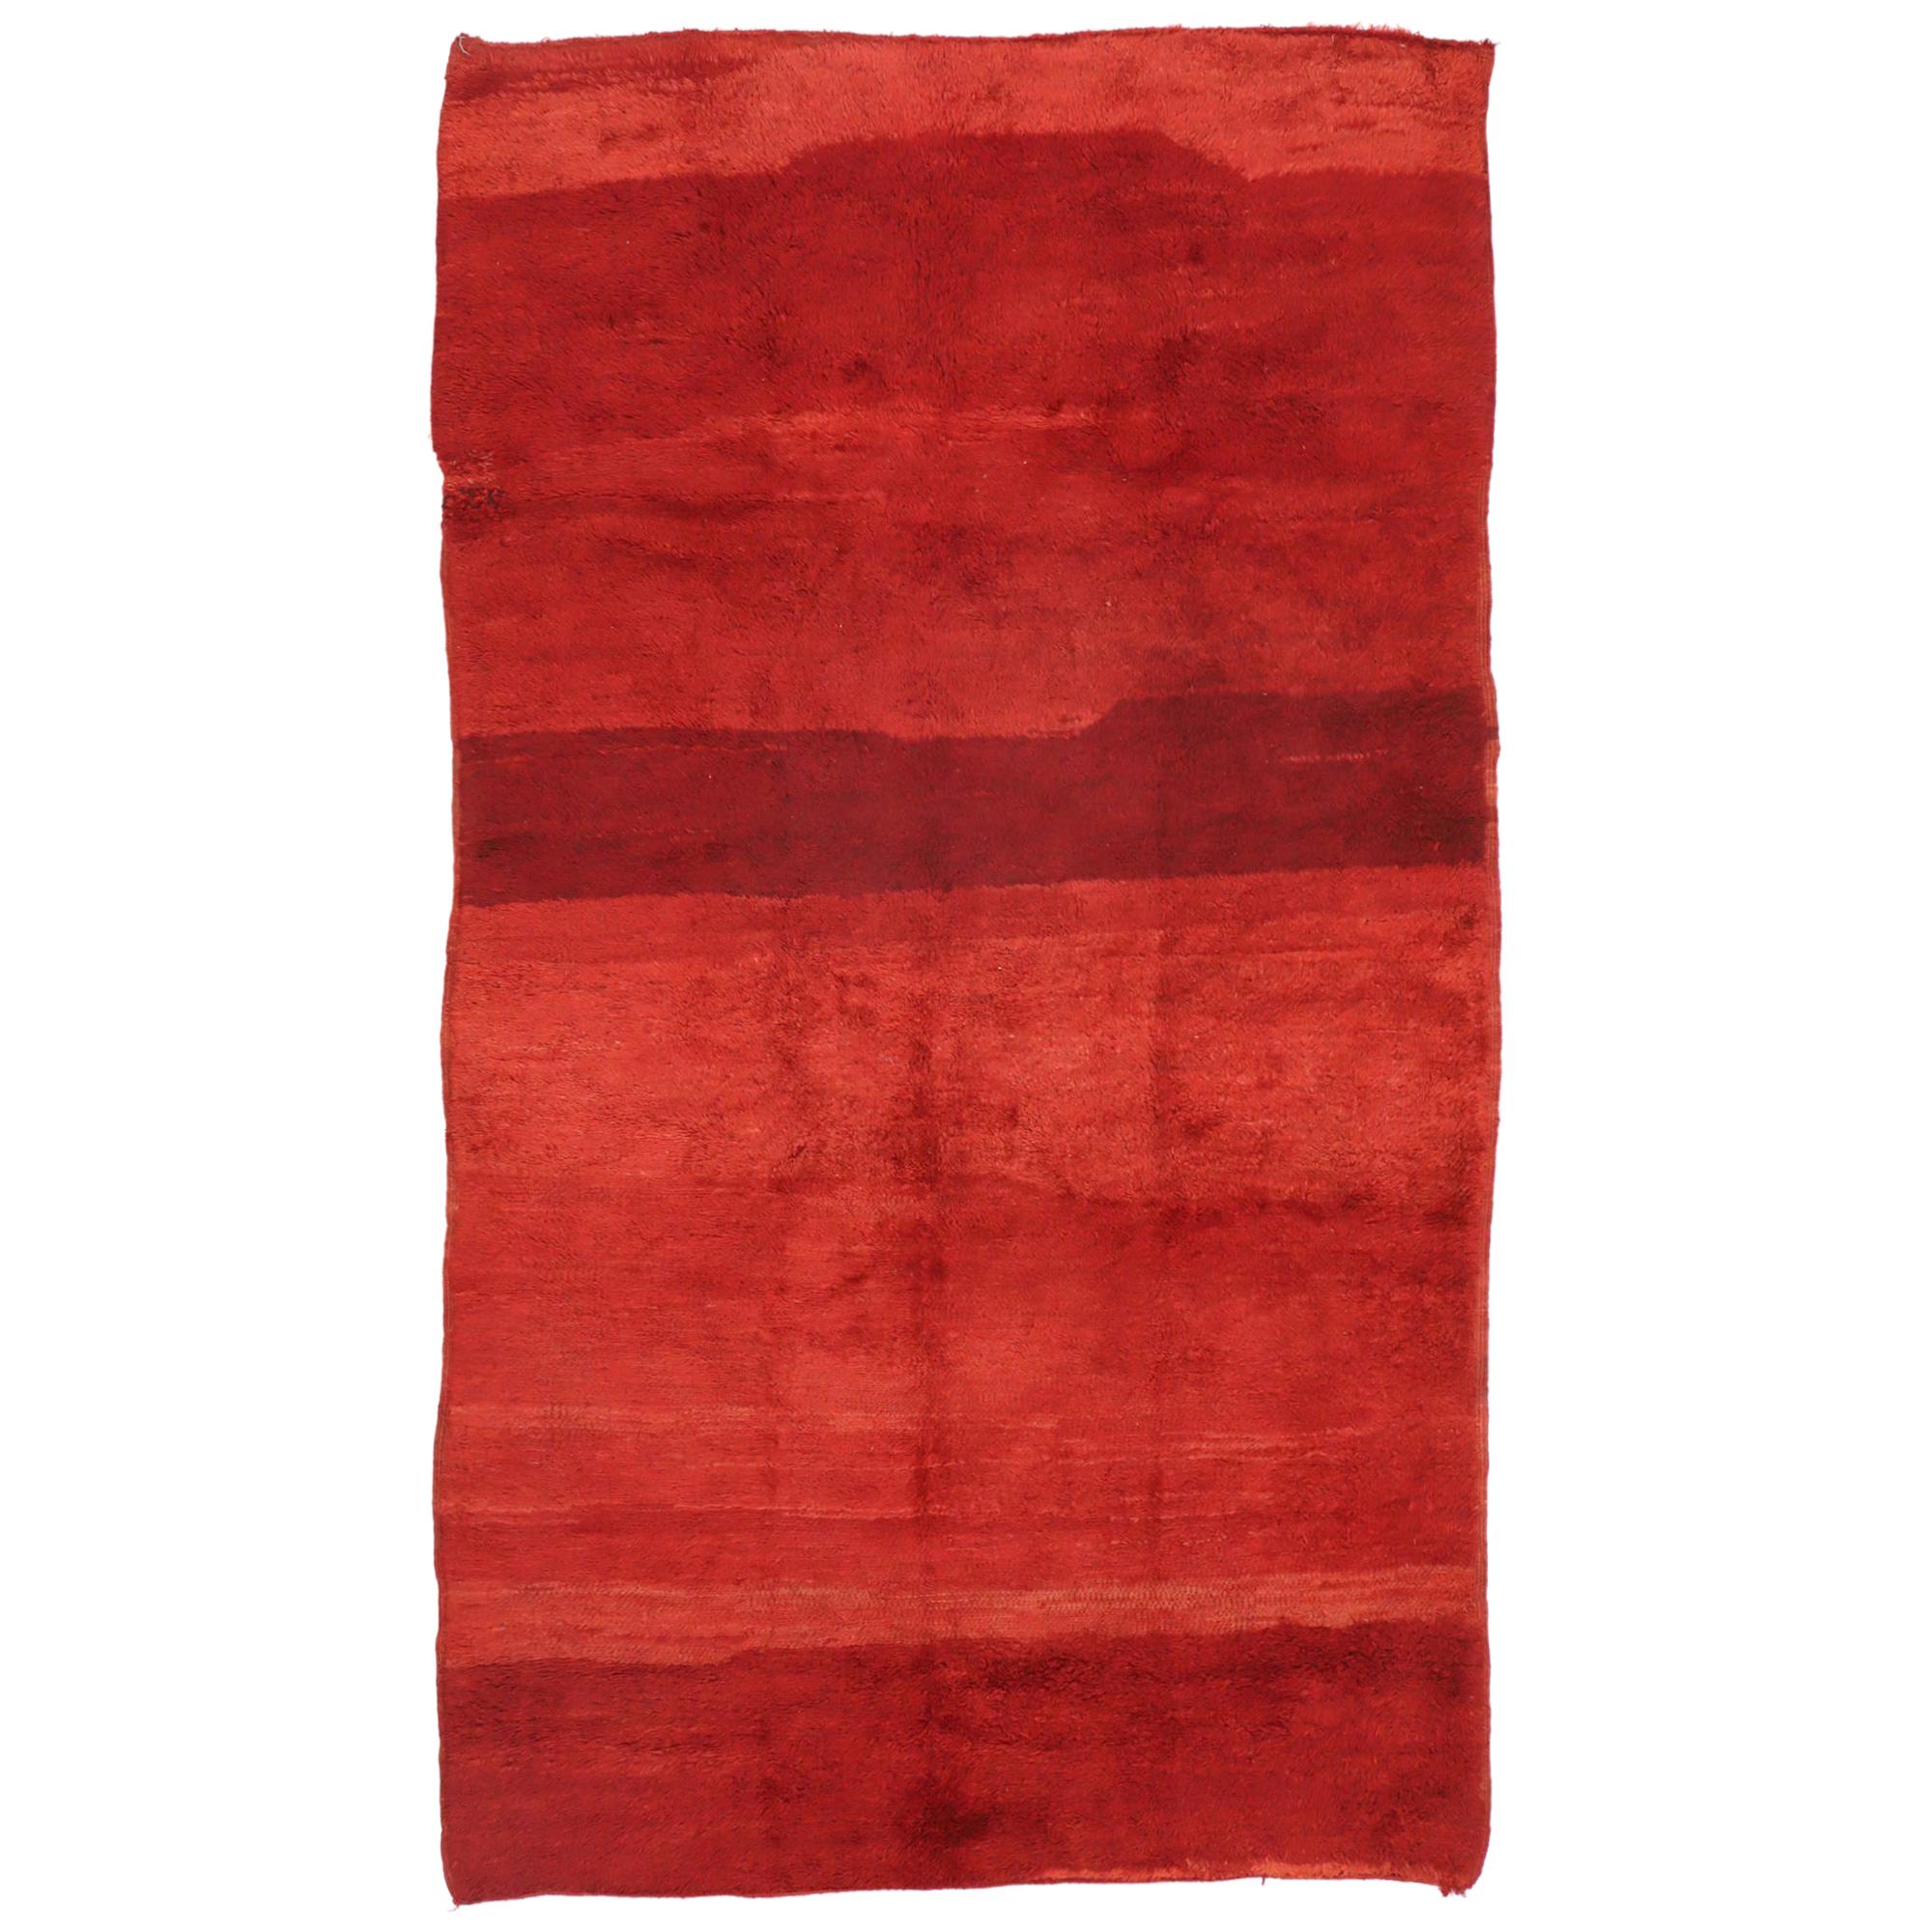 Vintage Red Beni Mrirt Moroccan Rug, Midcentury Boho Meets Expressionist Style